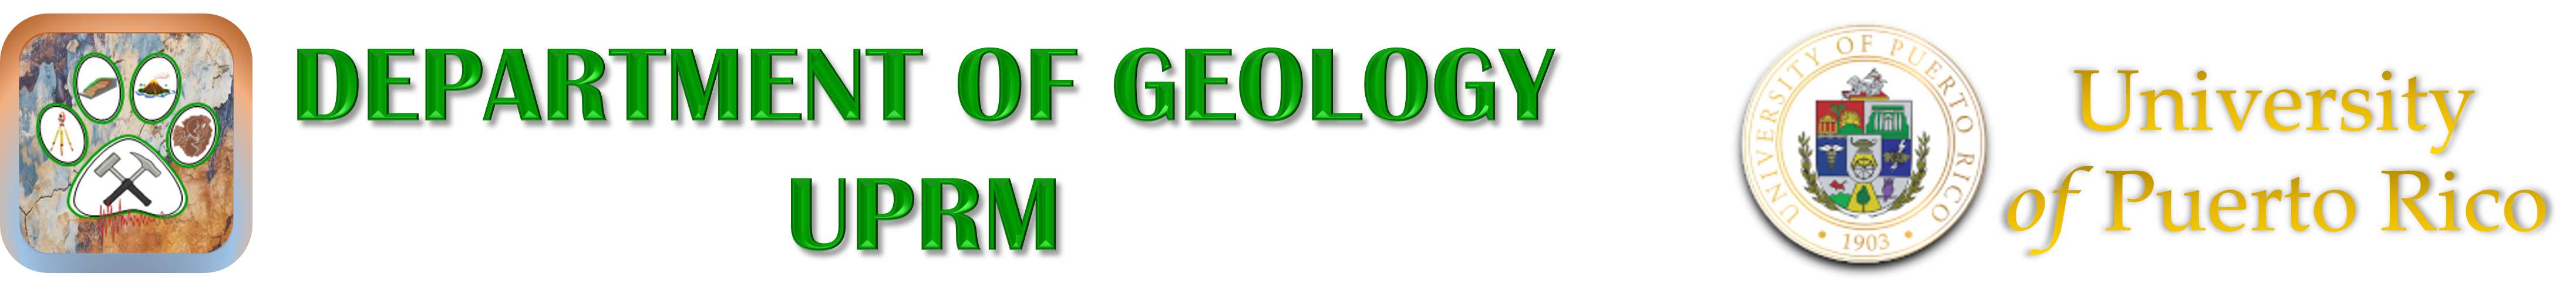 Geology Department